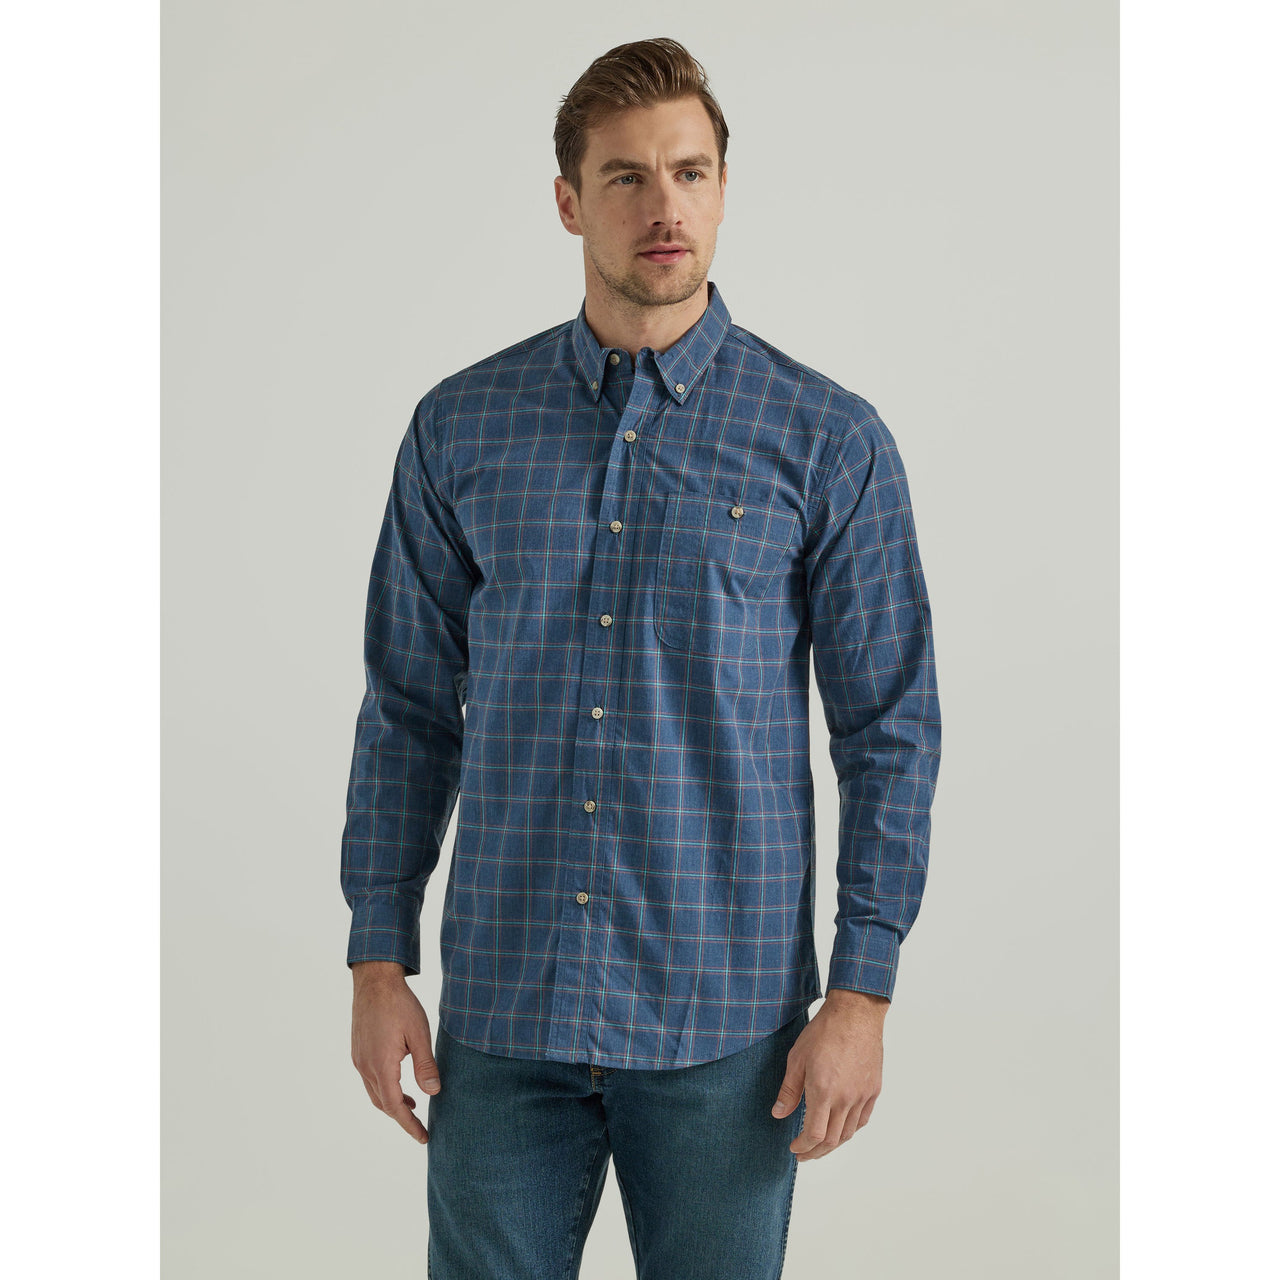 Wrangler Rugged Wear® Long Sleeve Flannel Plaid Button-Down Shirt in Navy  Indigo